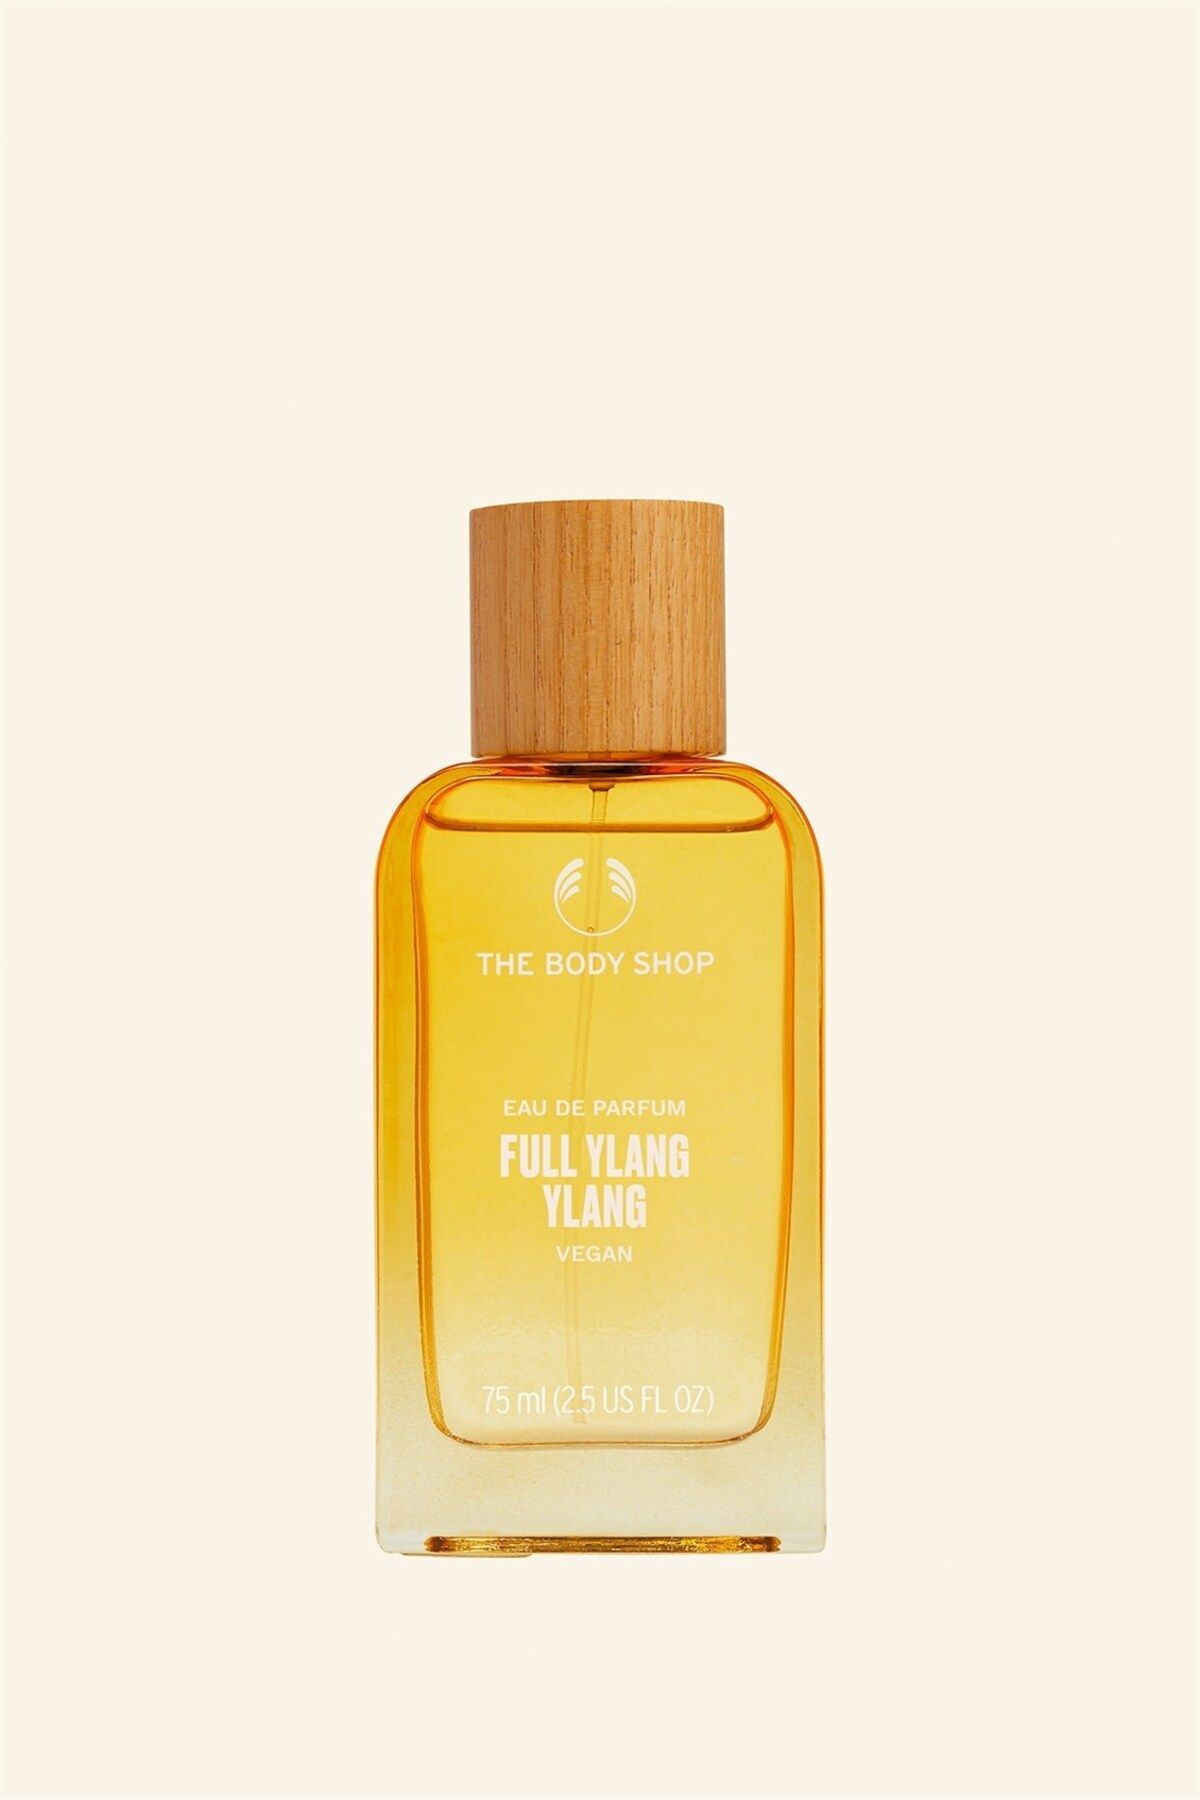 THE BODY SHOP Full Ylang Ylang Eau De Parfum 75 ml